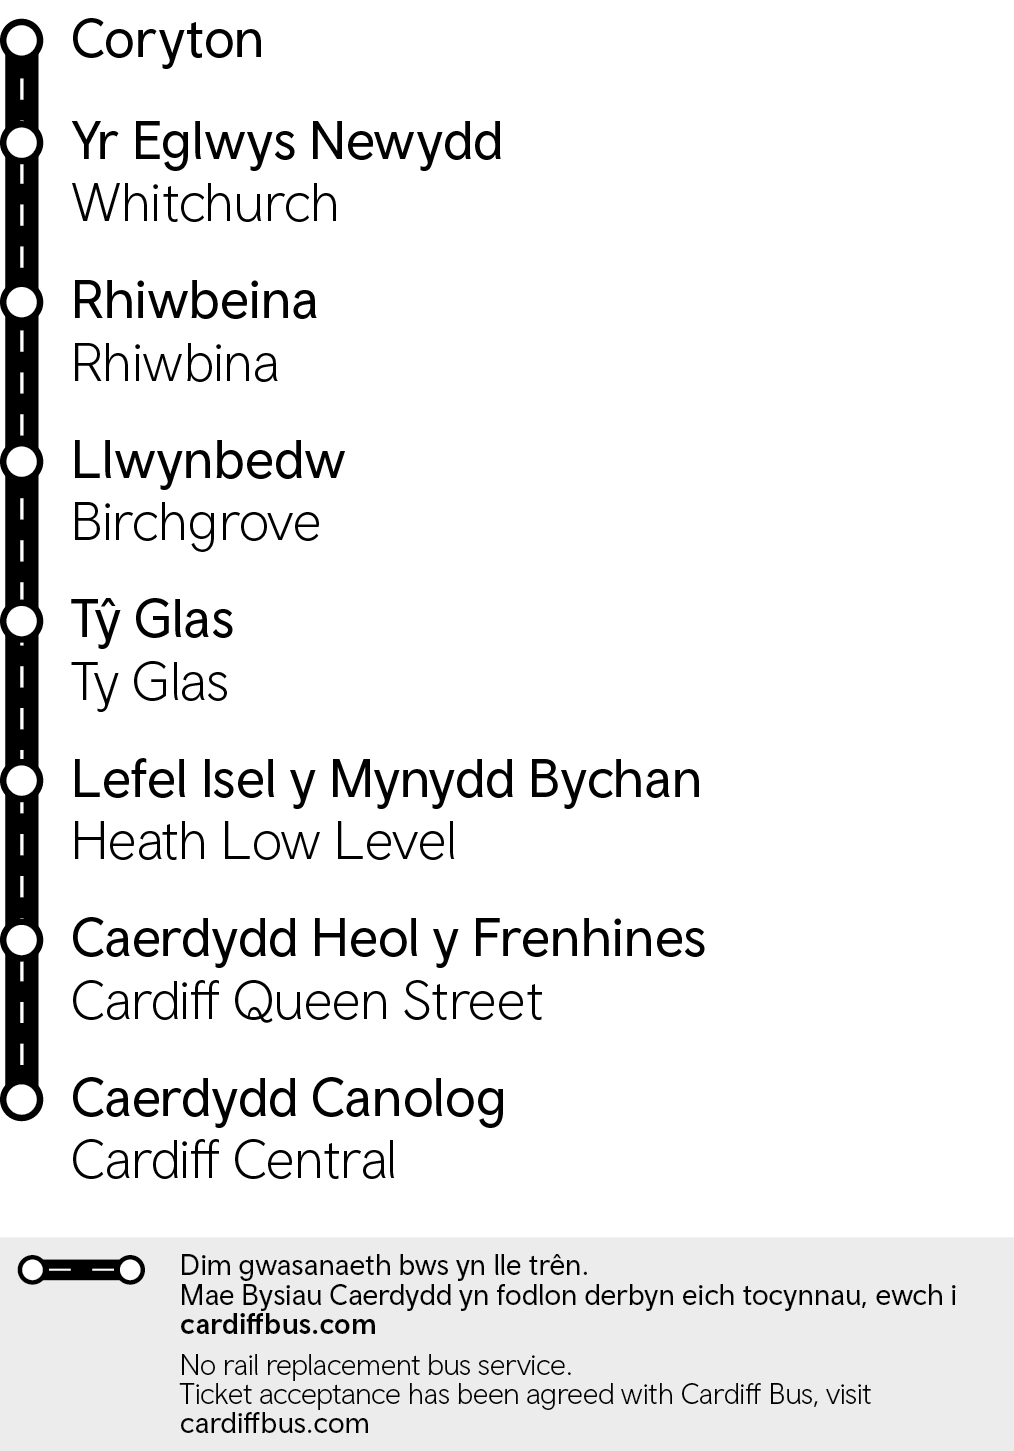 Cardiff Central - Coryton